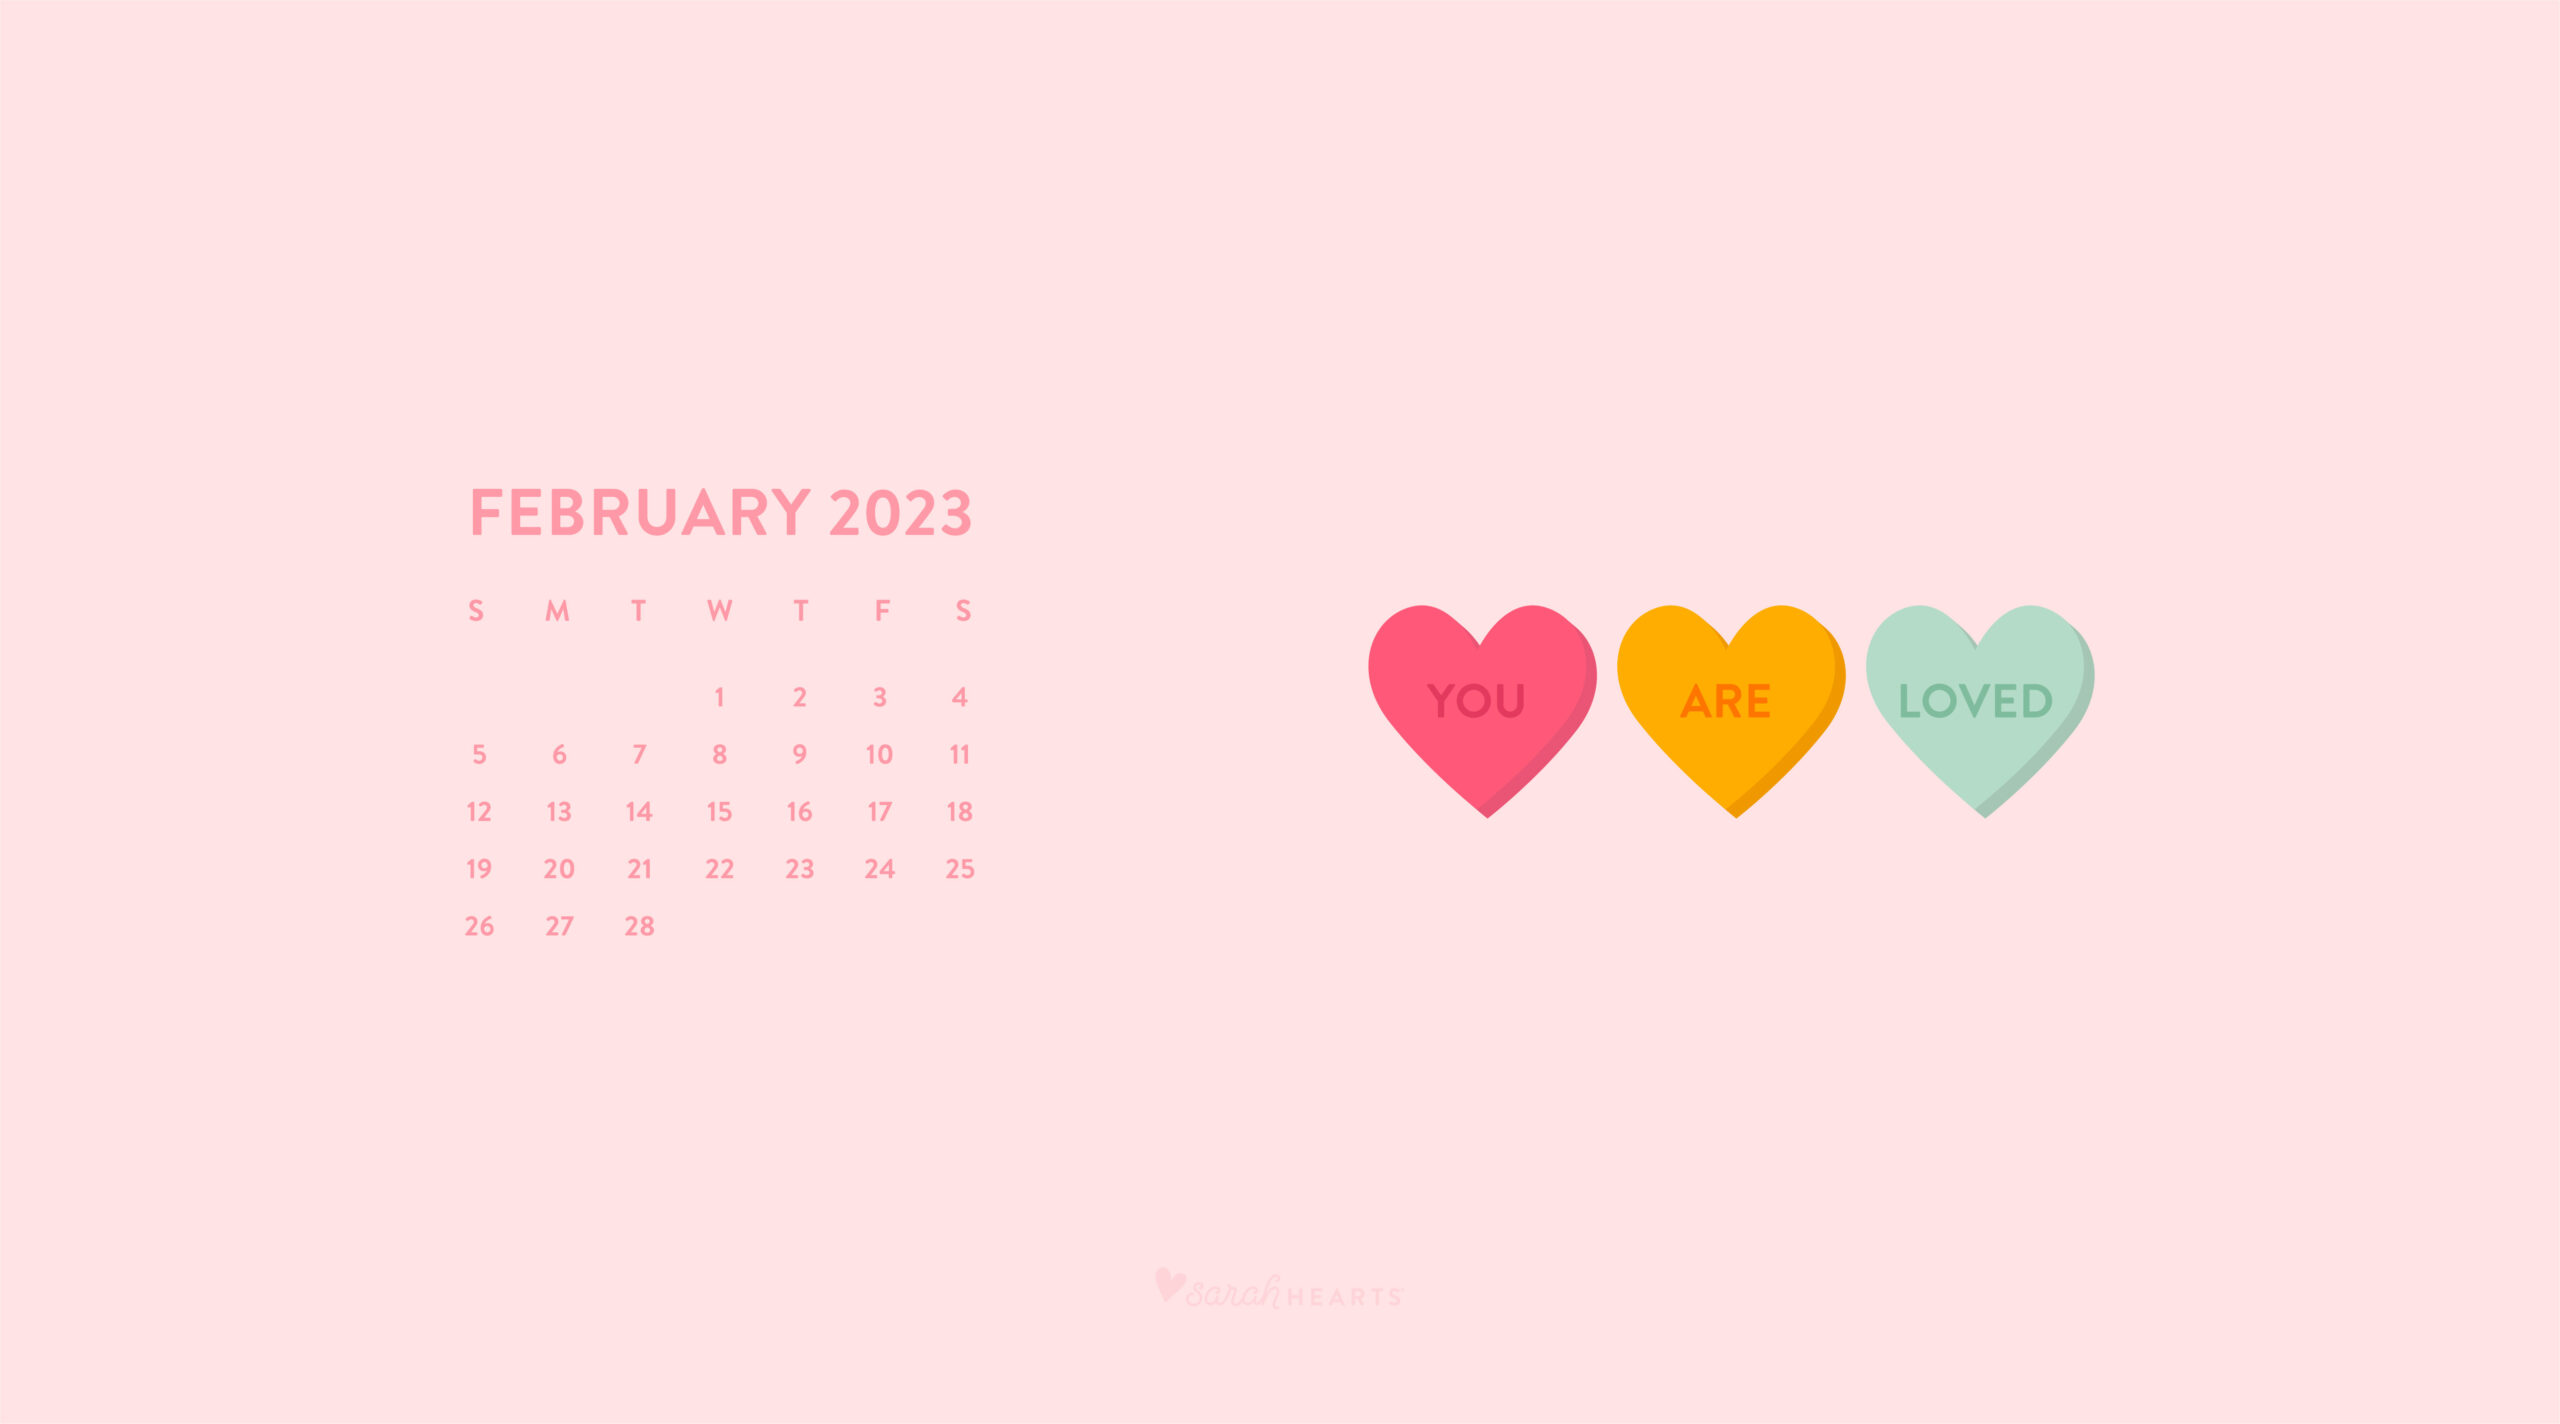 February 2023 wallpapers  60 FREEBIES for desktop  phones